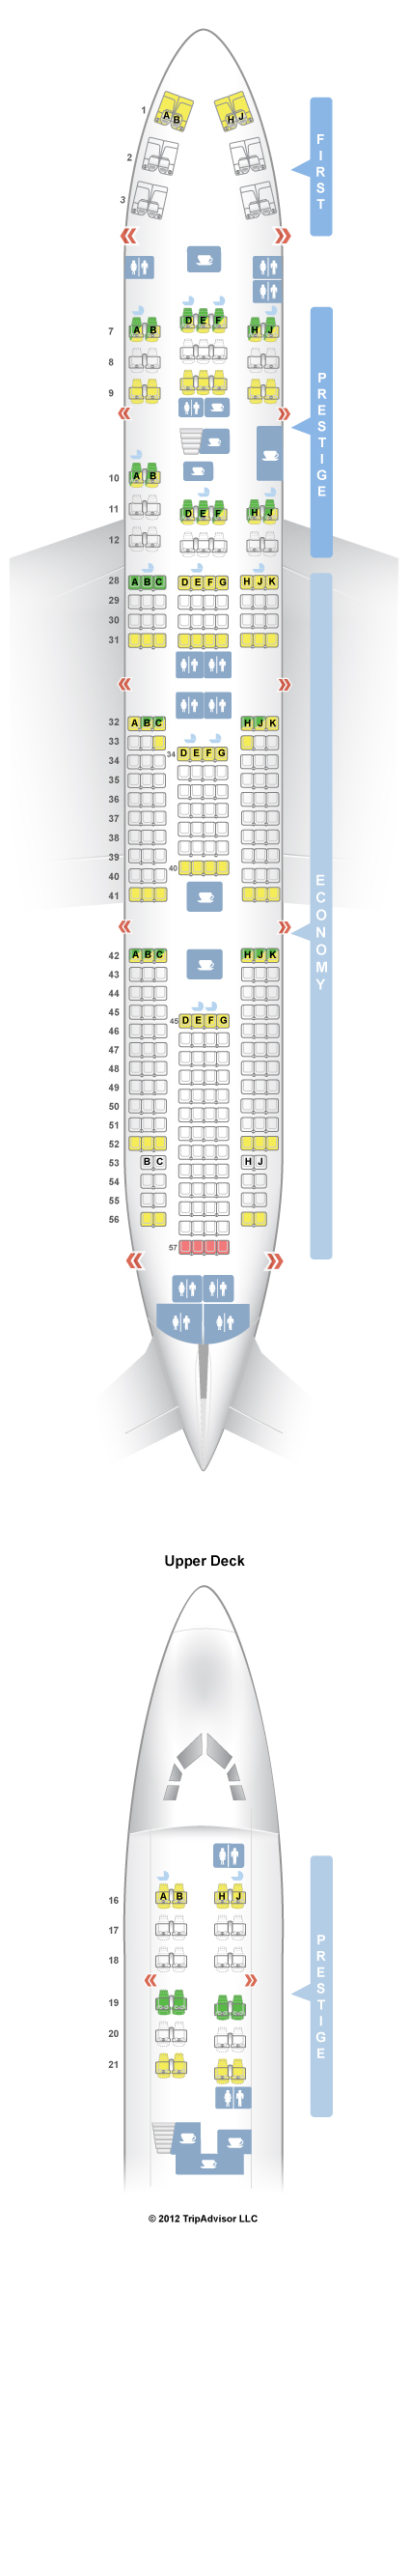 Lufthansa 474 Seating Chart